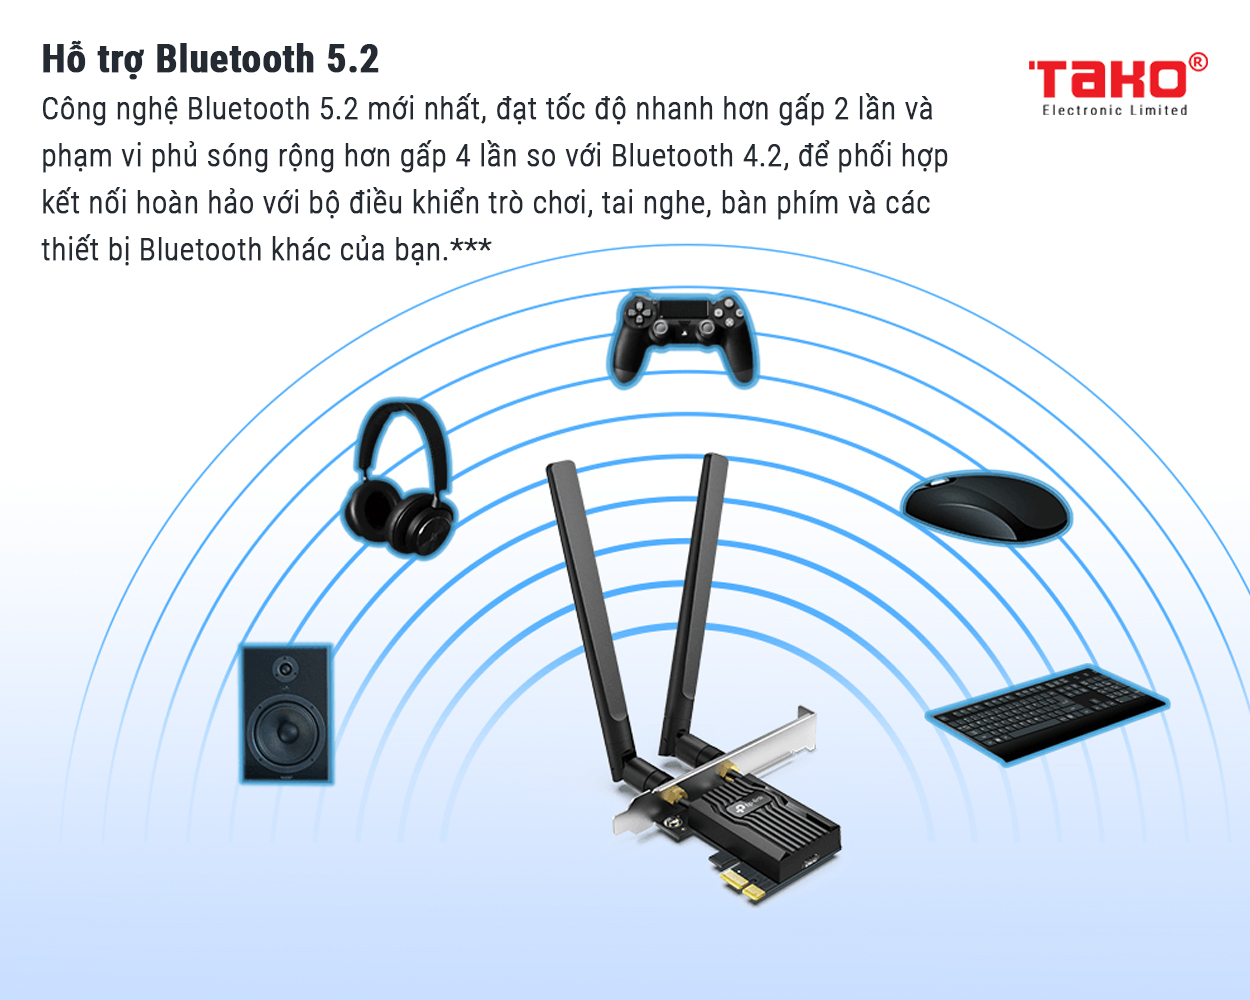 Archer TX55E AX3000 Wi-Fi 6 Bluetooth 5.2 PCIe Adapter 1